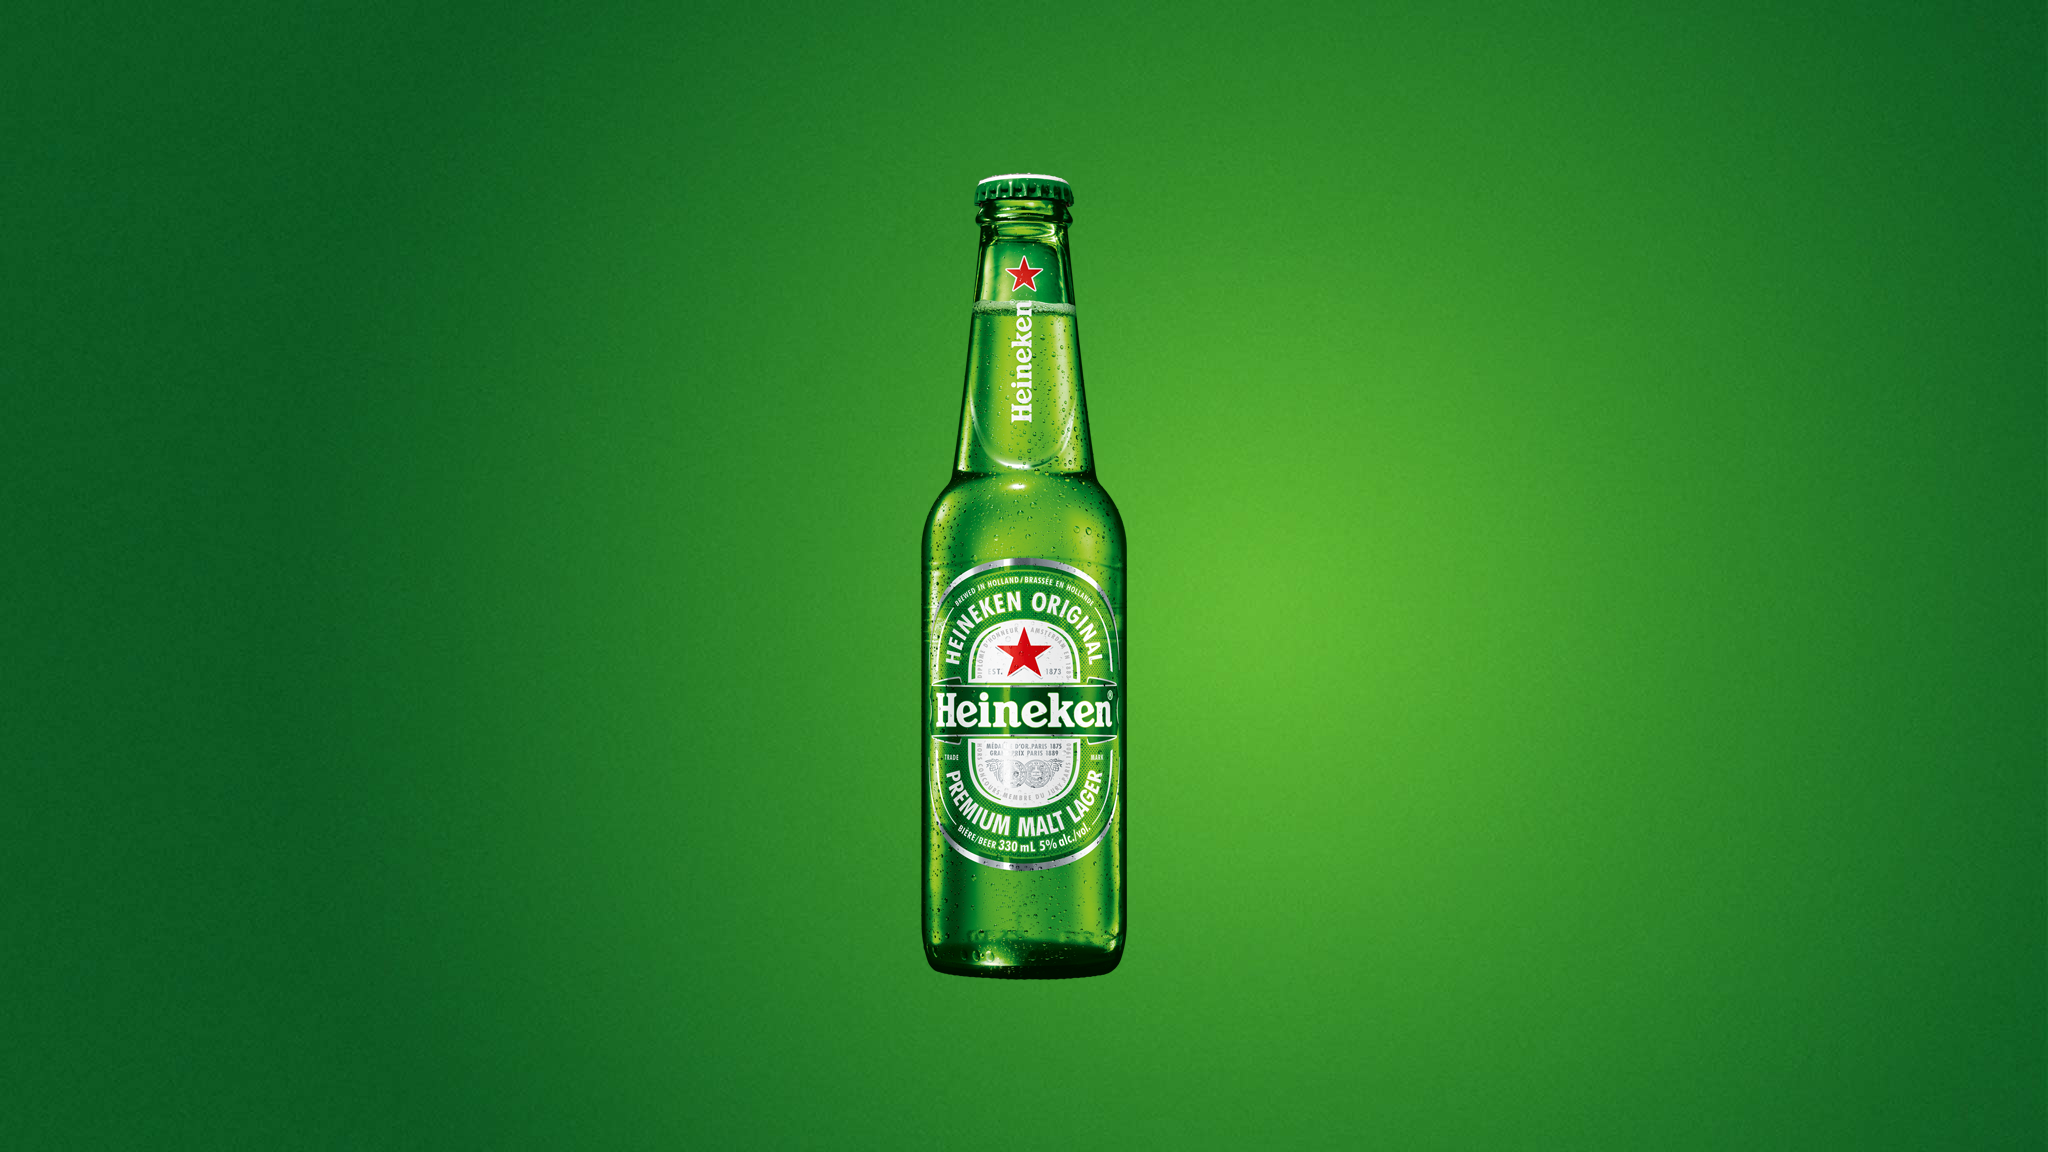 Heineken Photos and Images